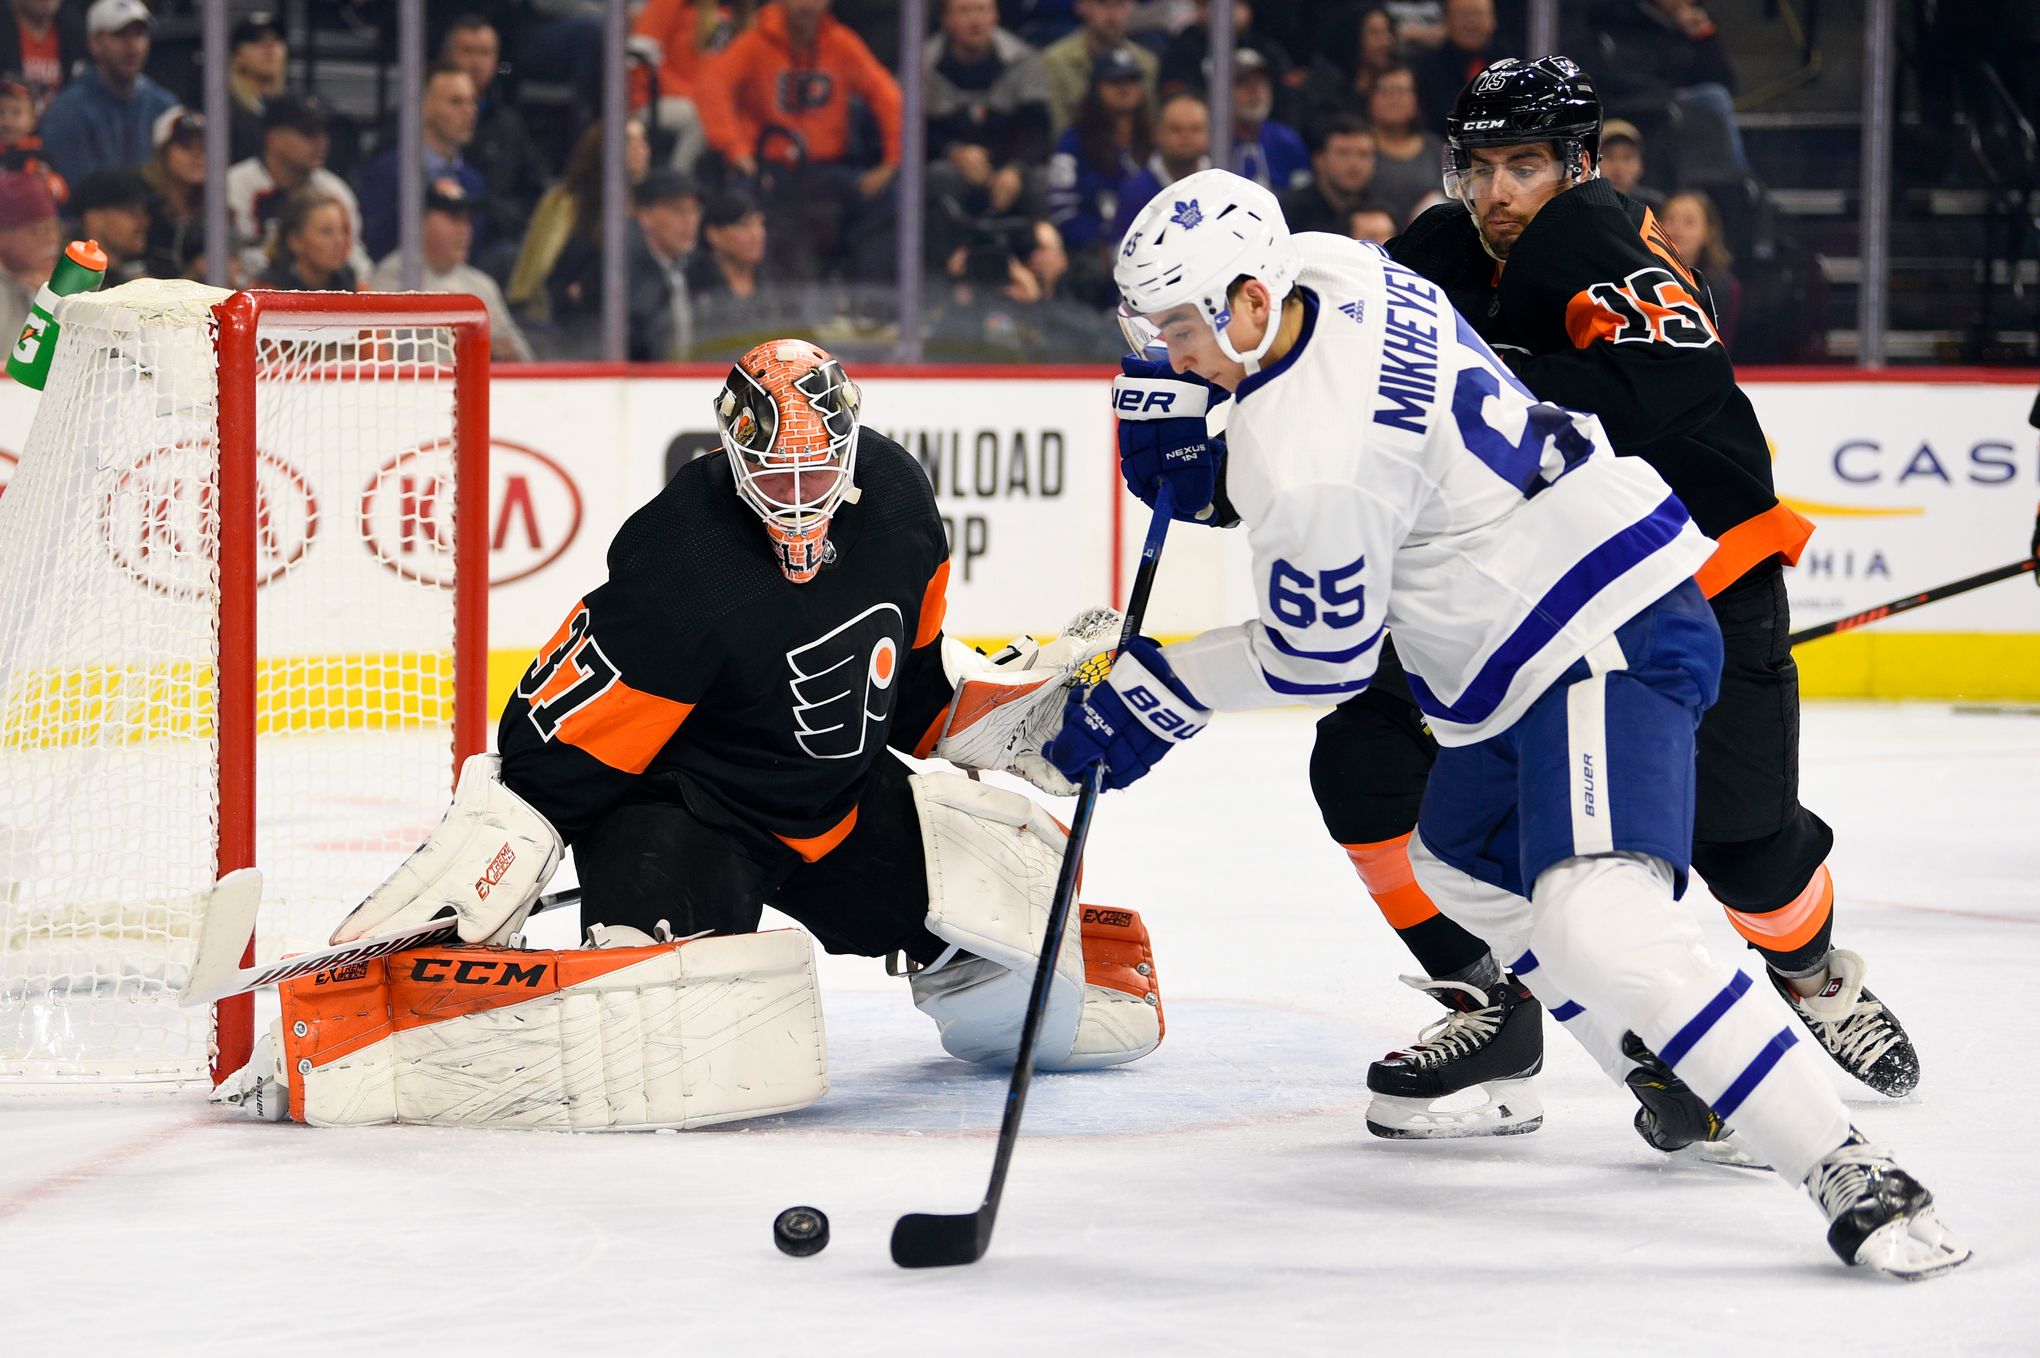 Toronto Maple Leafs: Frederik Andersen gets redemption in Game 3